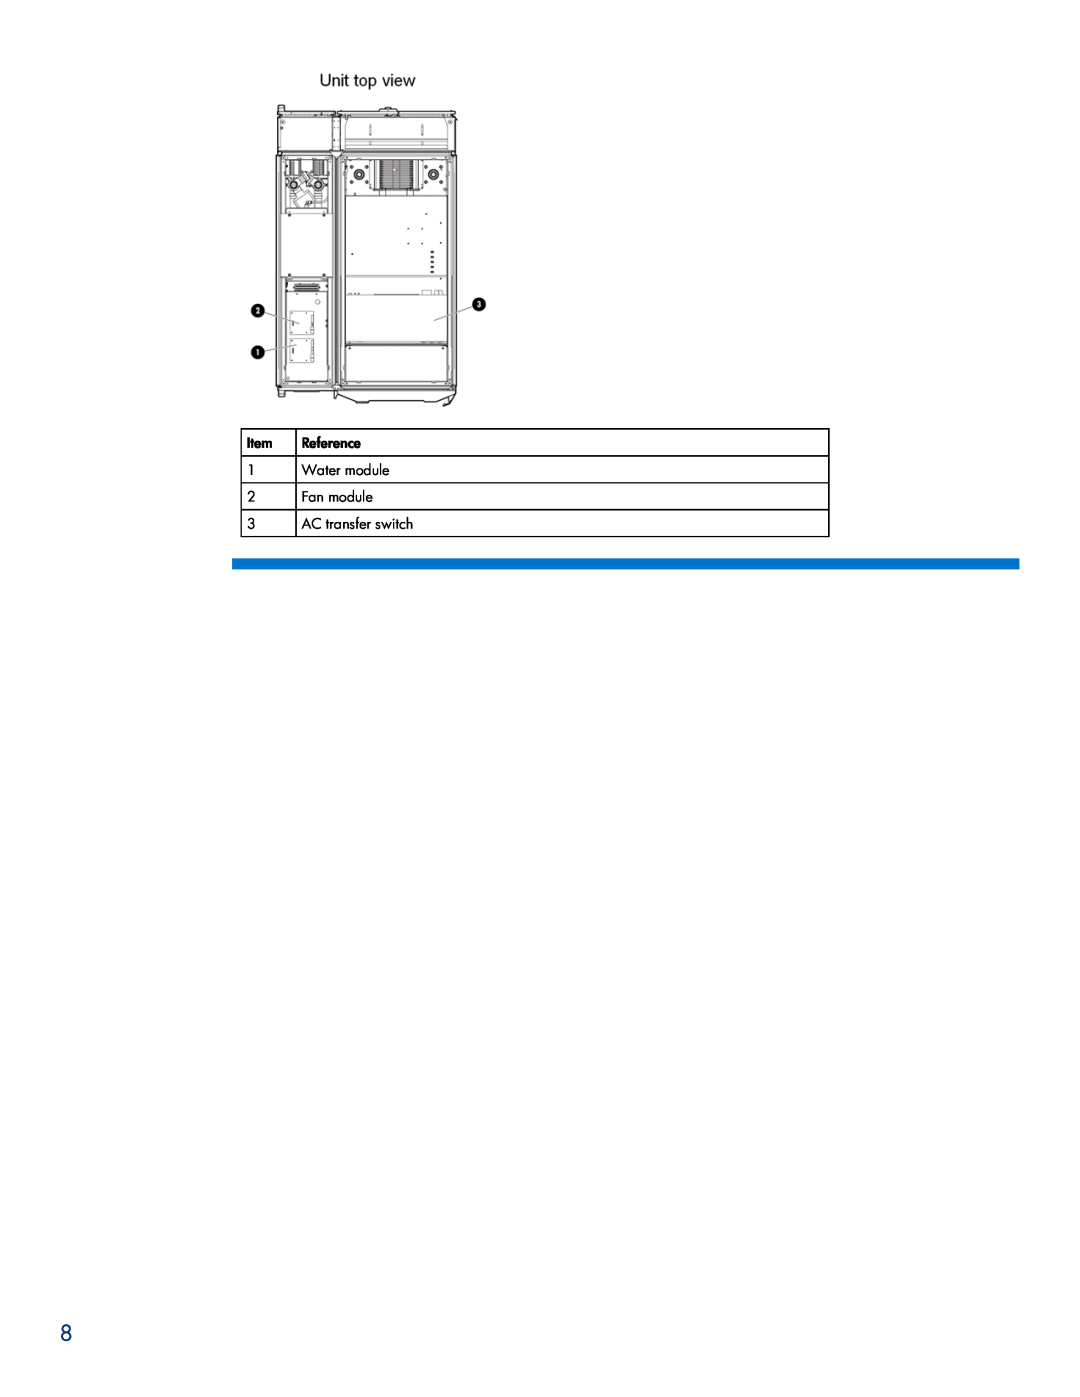 HP Modular Cooling System manual Reference, Water module, Fan module, AC transfer switch 